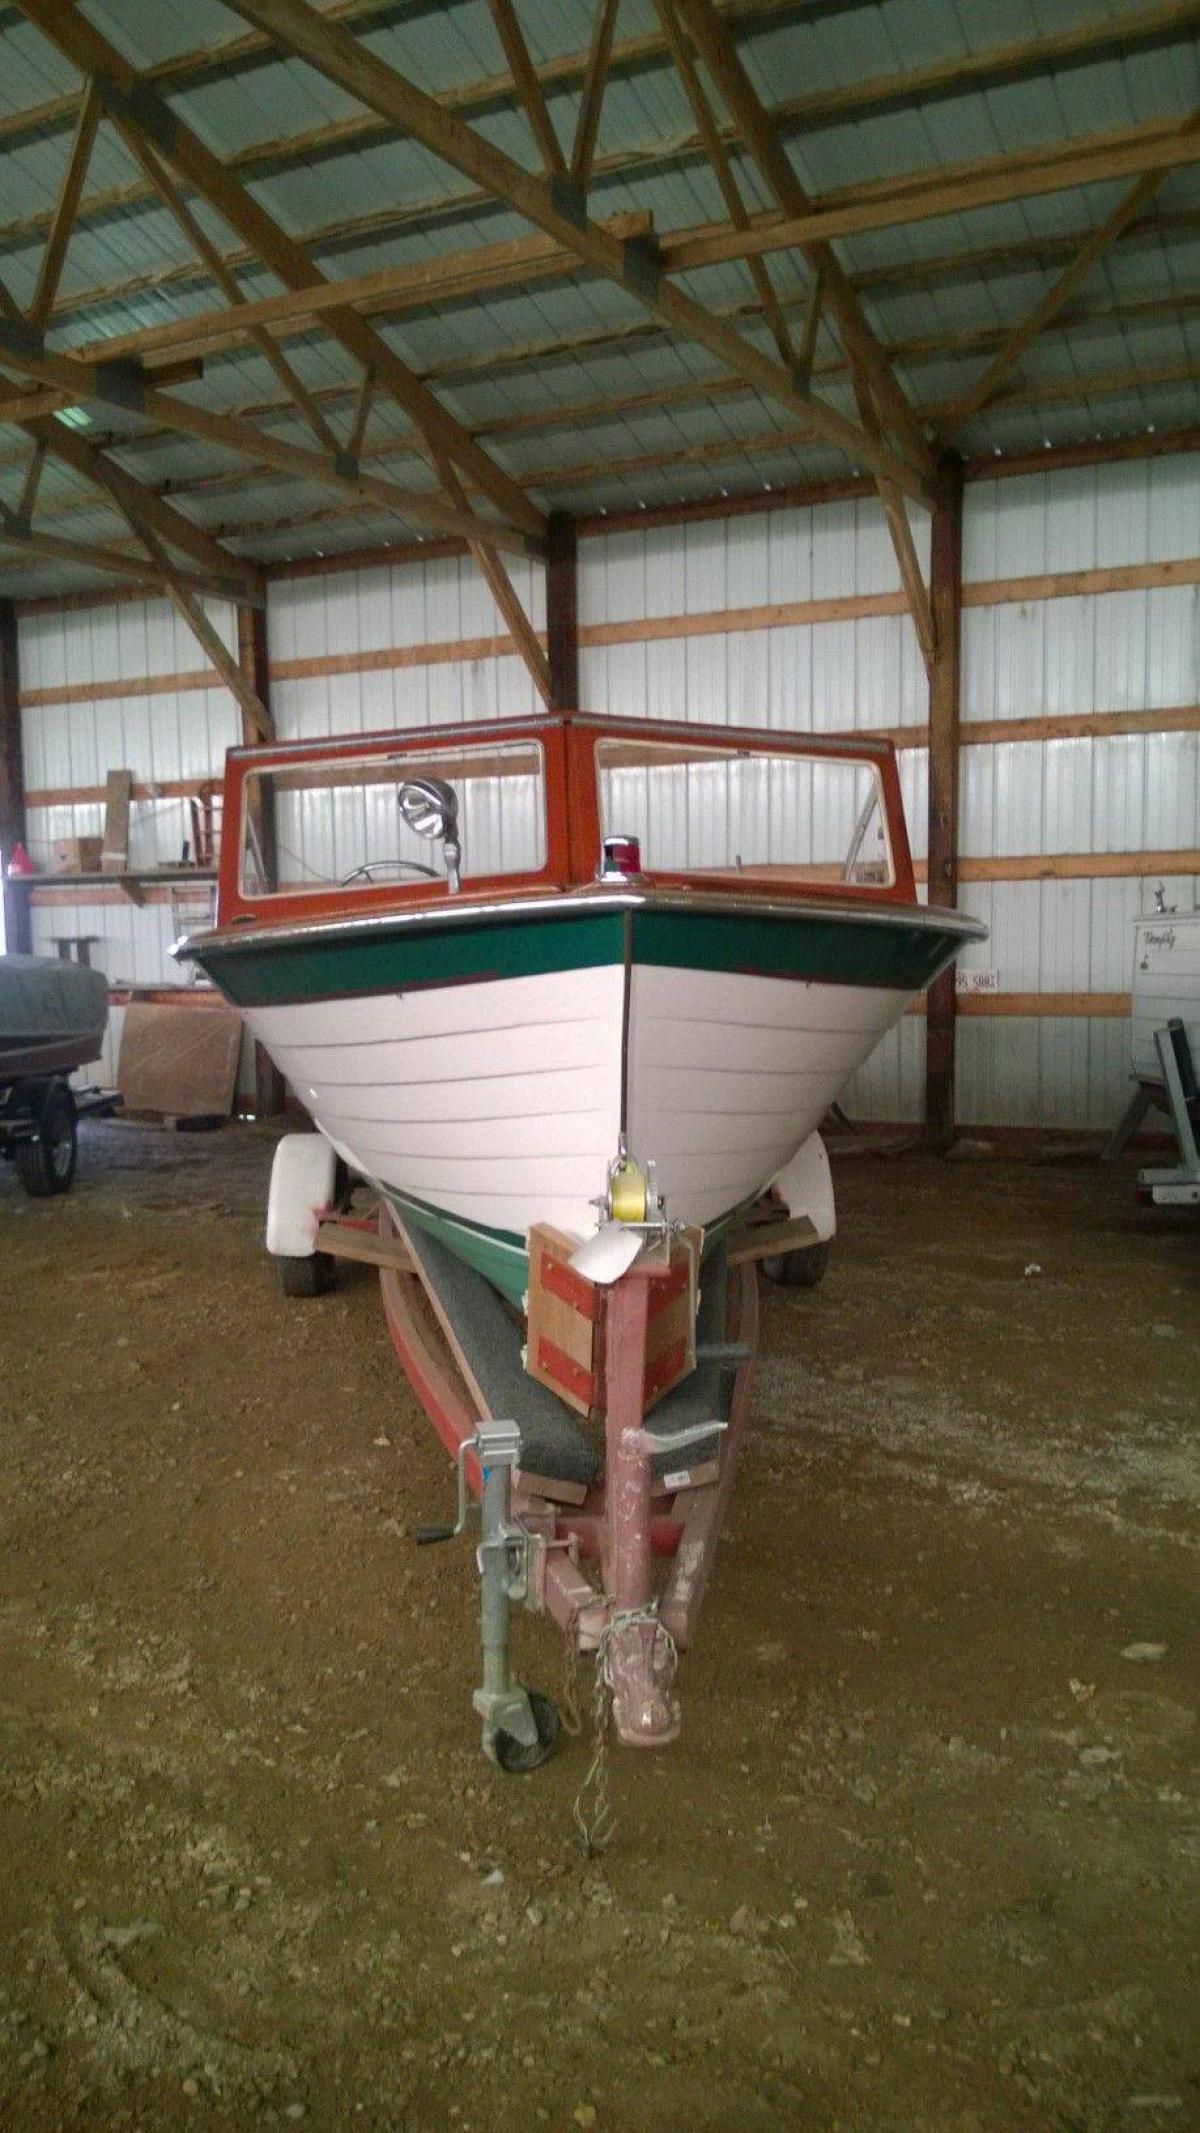 Classic Wooden Boat for Sale -  1964 LYMAN 21' CUDDY STYLE INBOARD